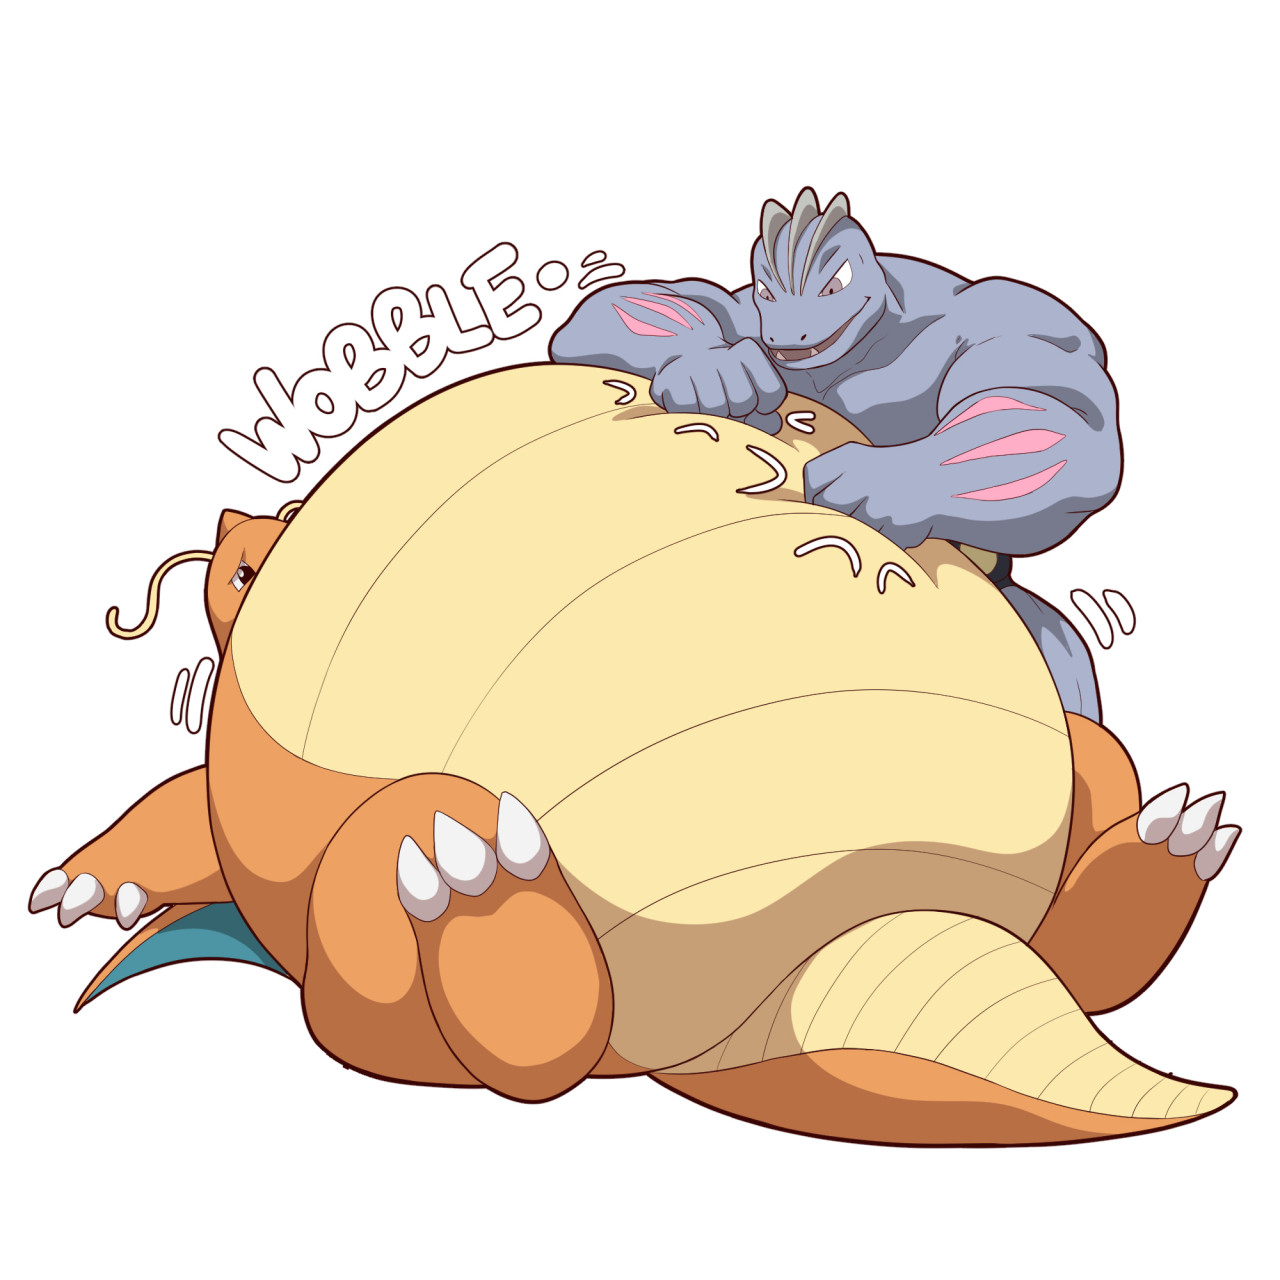 Fatty dragonite